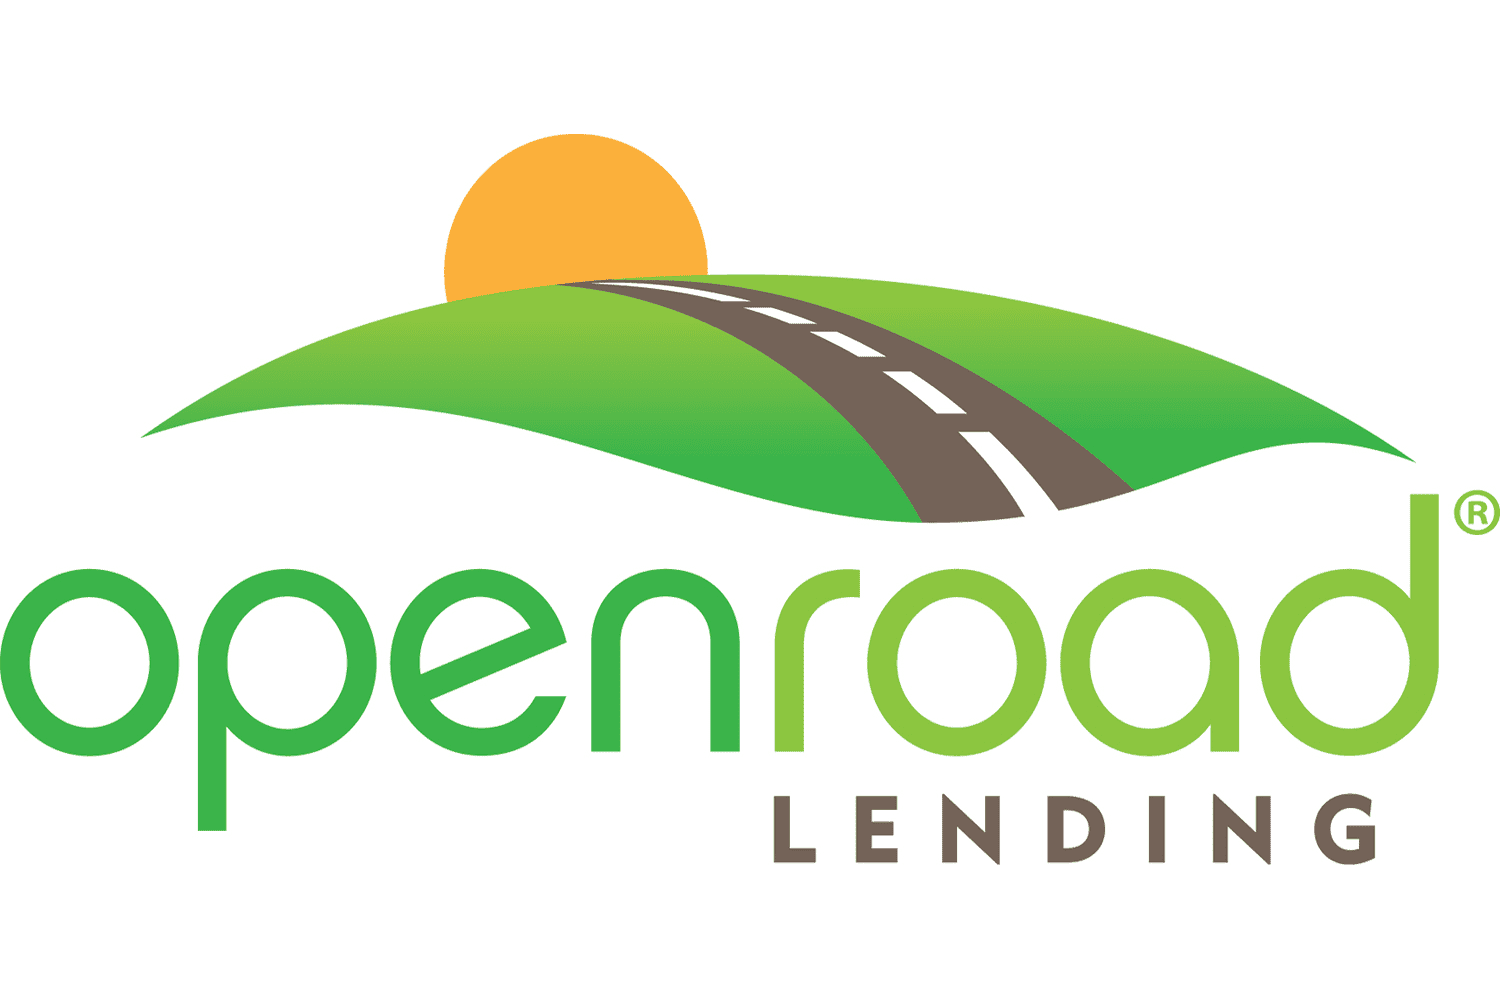 Who Is Open Road Lending